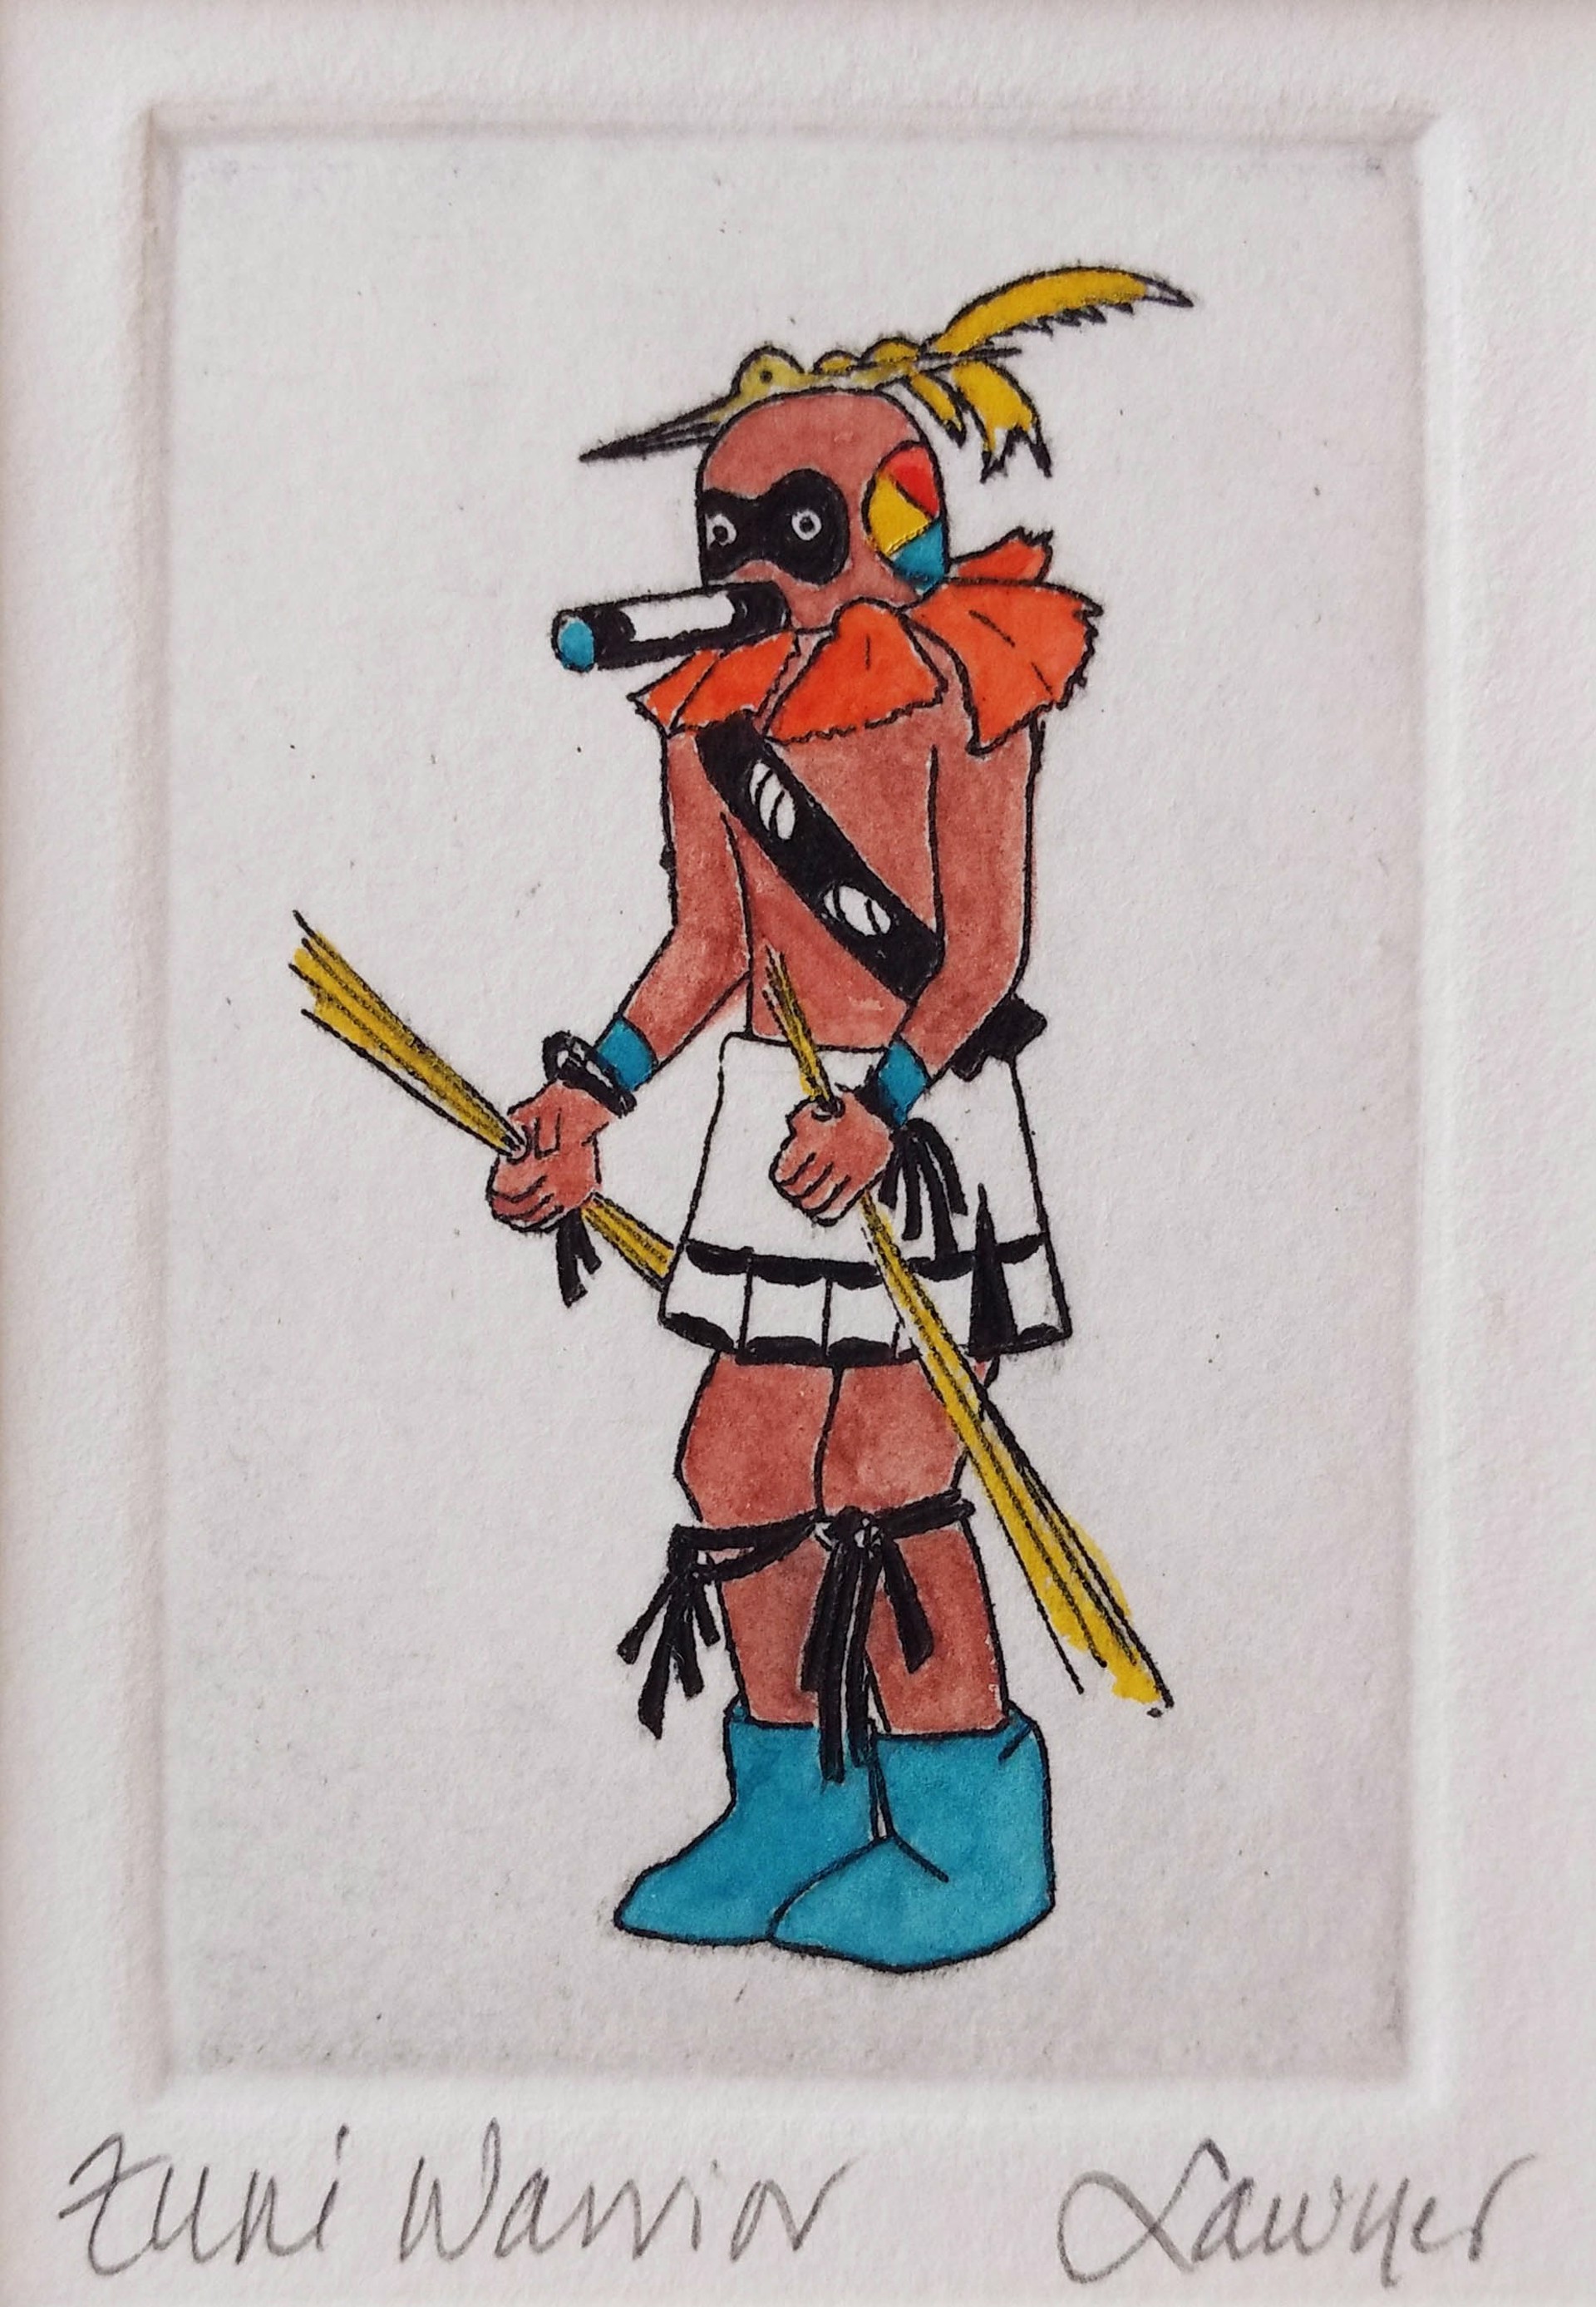 Zuni Warrior Katchina (framed) by Anne Sawyer